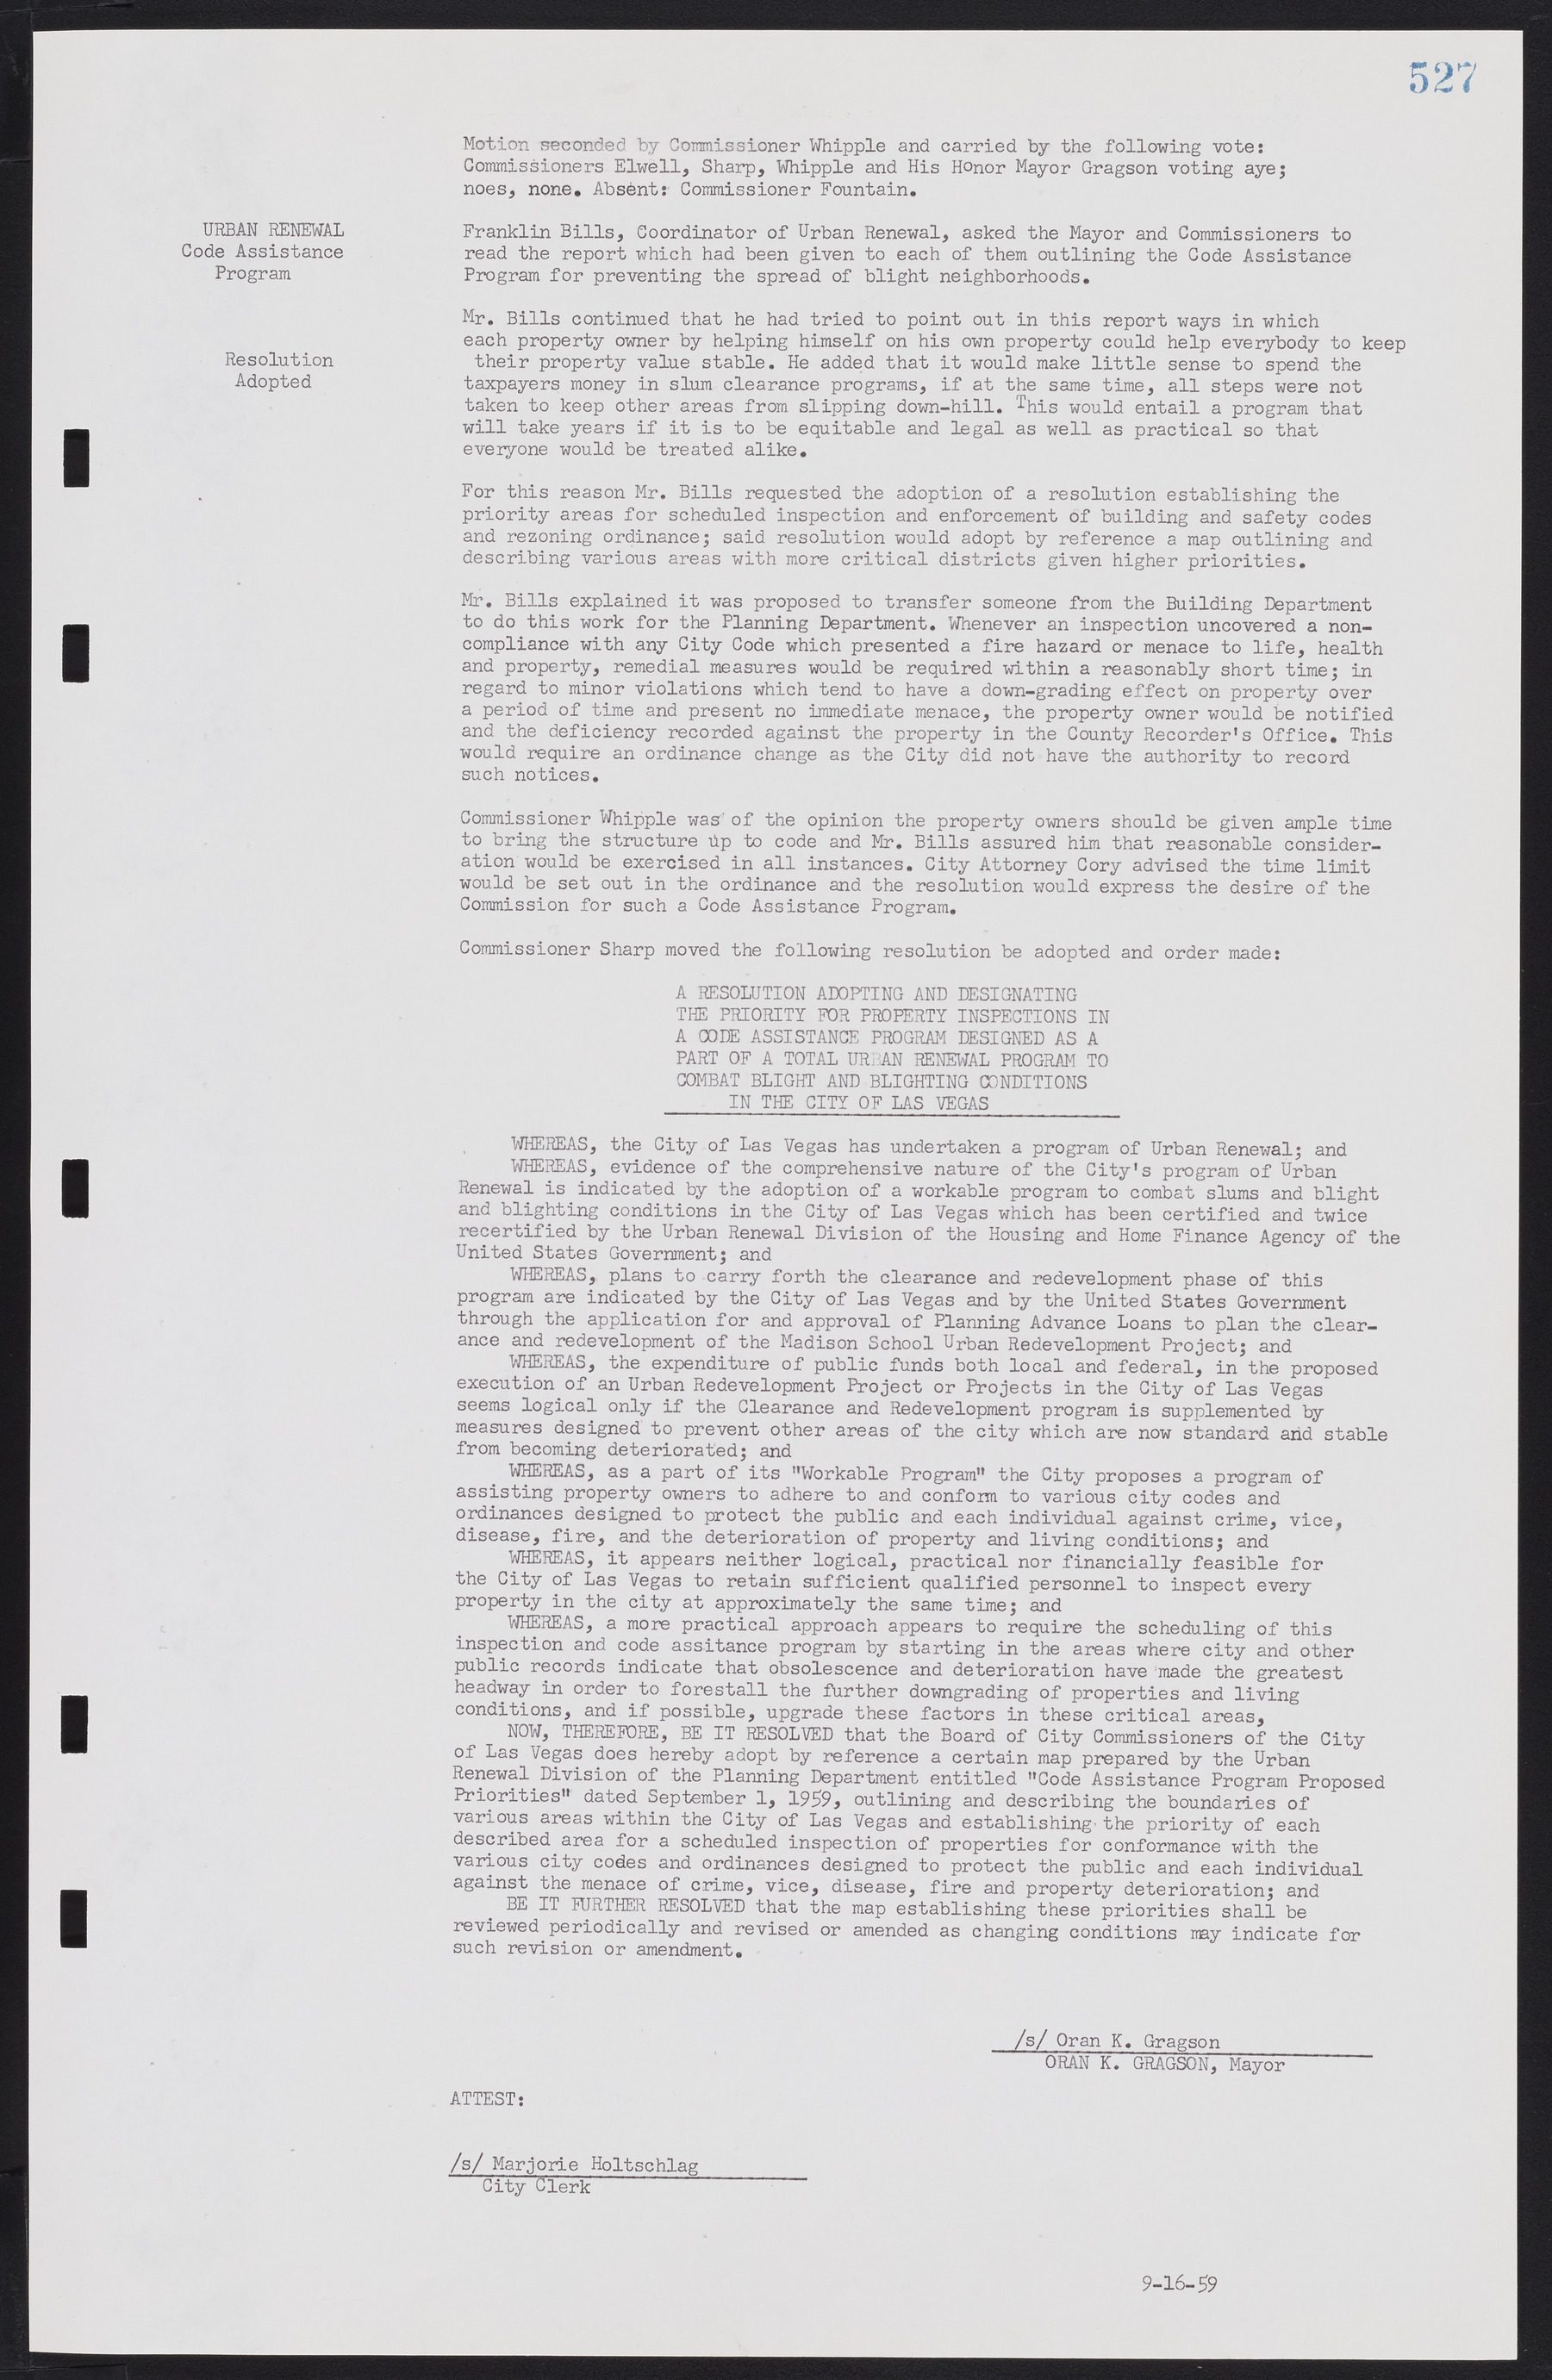 Las Vegas City Commission Minutes, November 20, 1957 to December 2, 1959, lvc000011-563